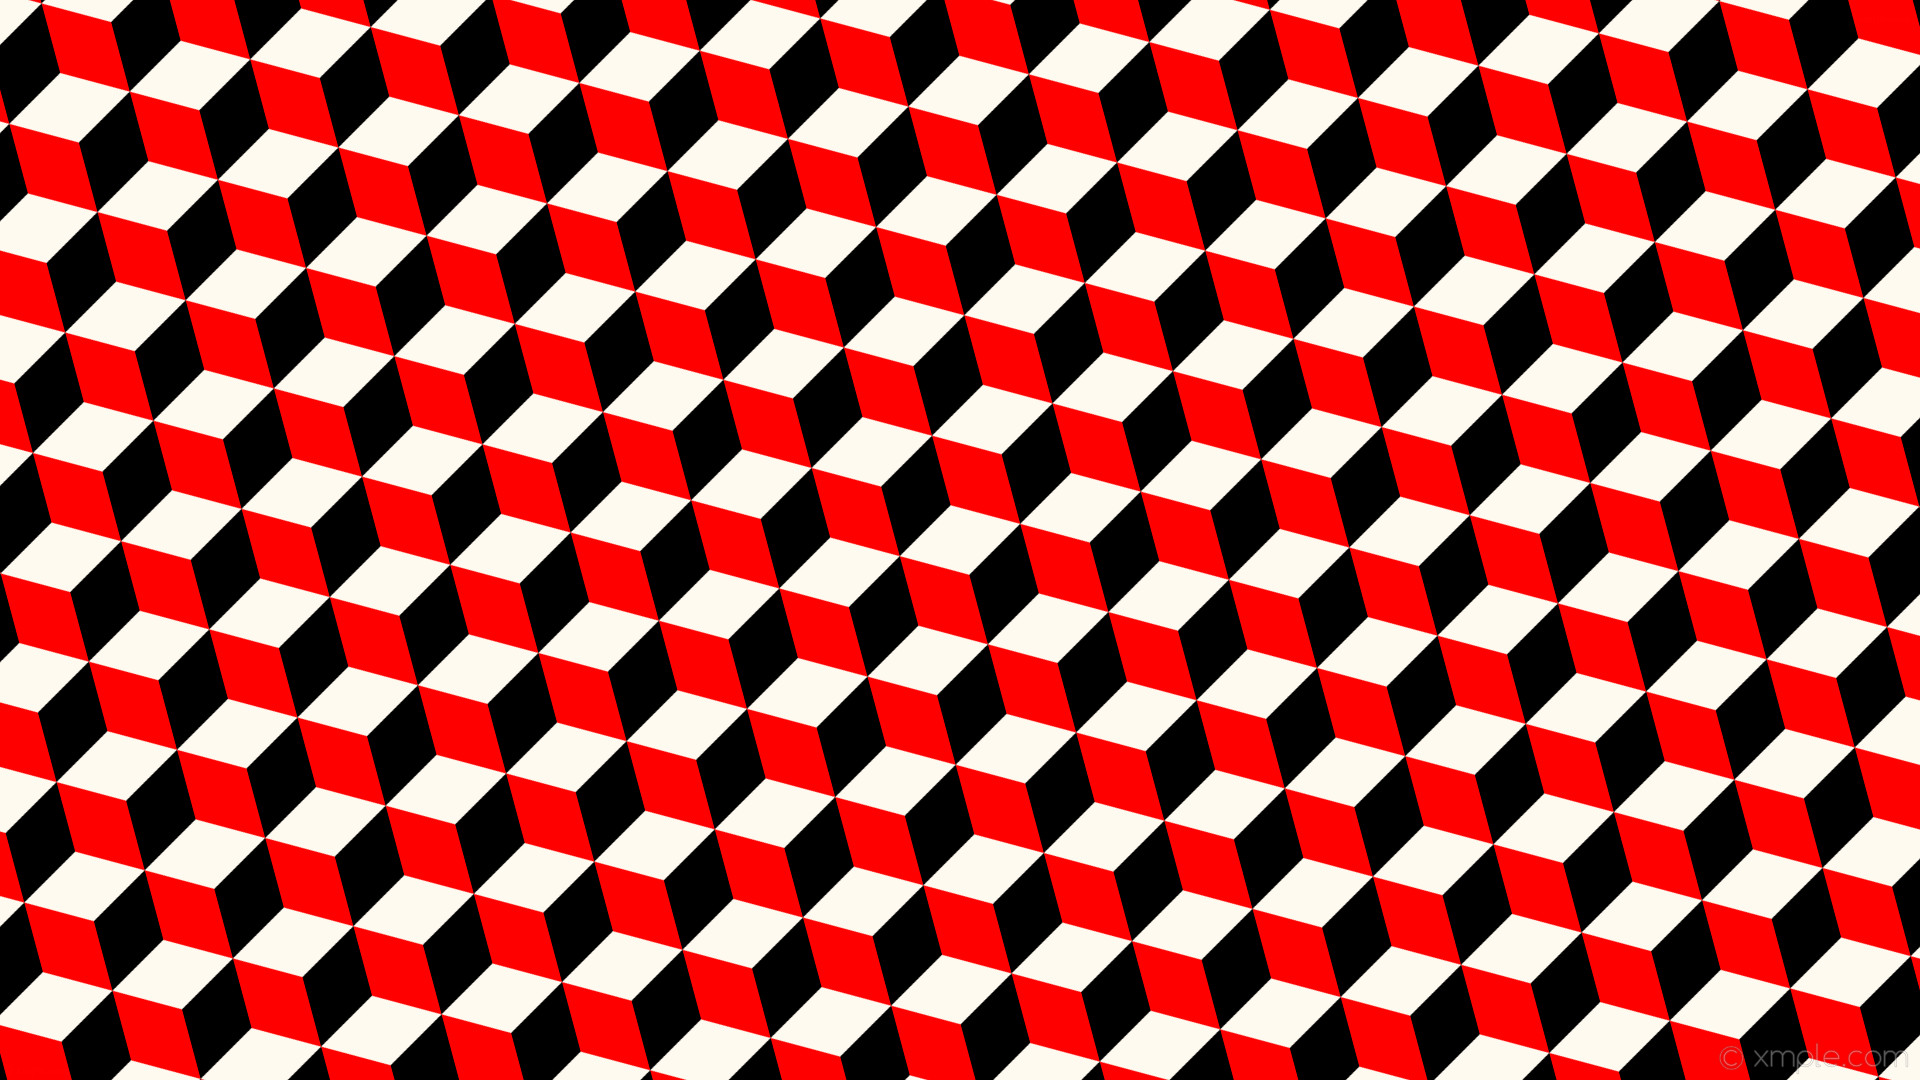 1920x1080 wallpaper 3d cubes black red white floral white #fffaf0 #ff0000 #000000 195Â°